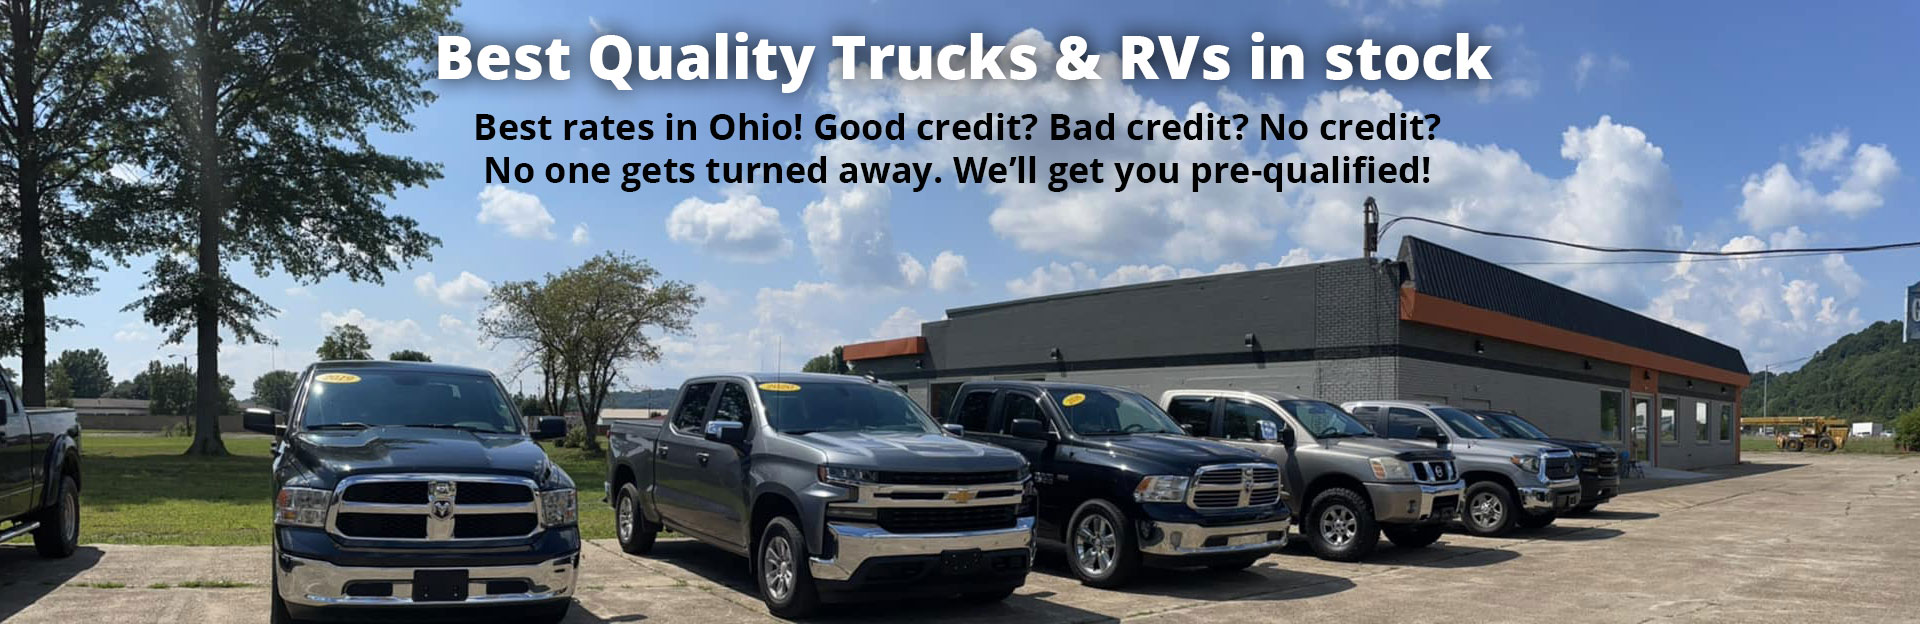 best quality trucks & rvs in stock